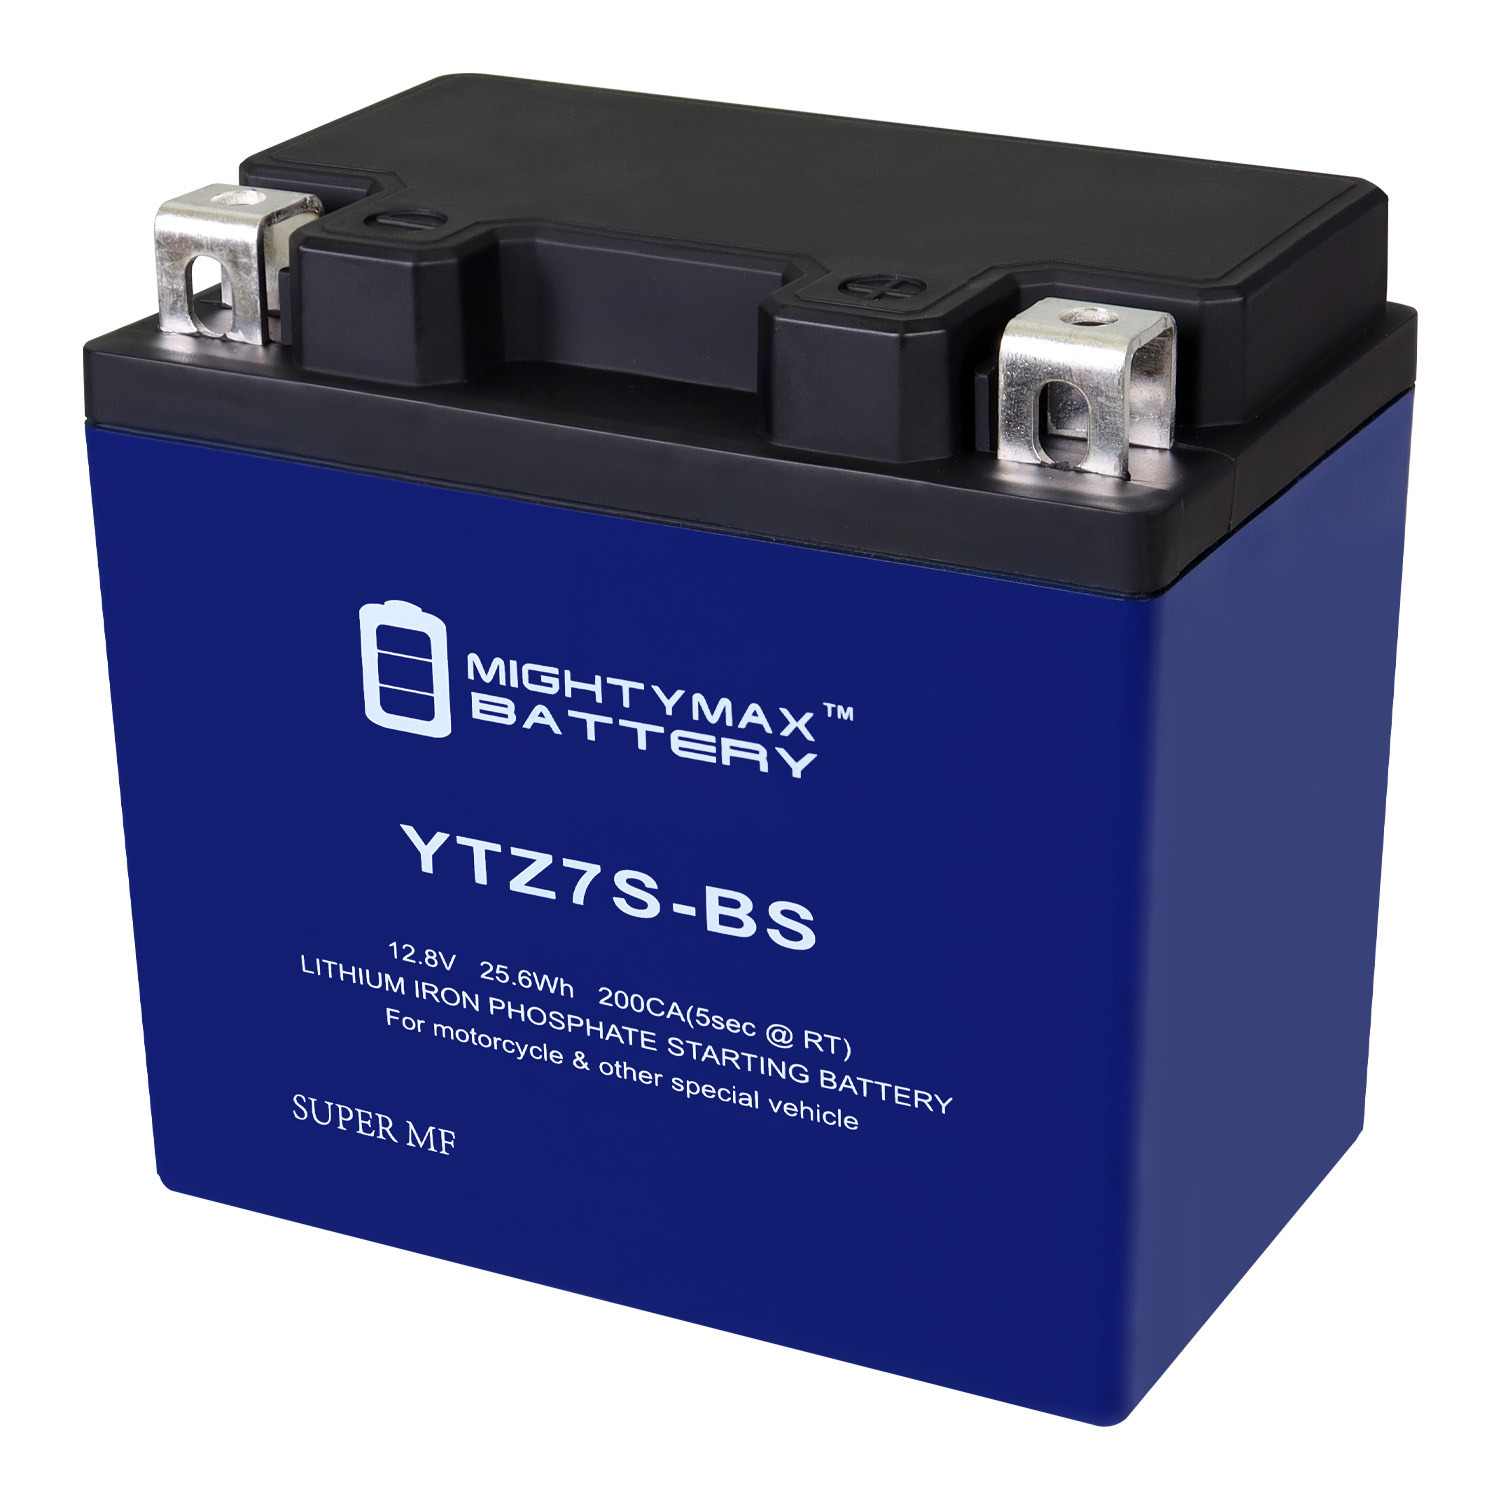 Ytz7s Lithium Battery for Yuasa AGM High Performance Maintenance Free